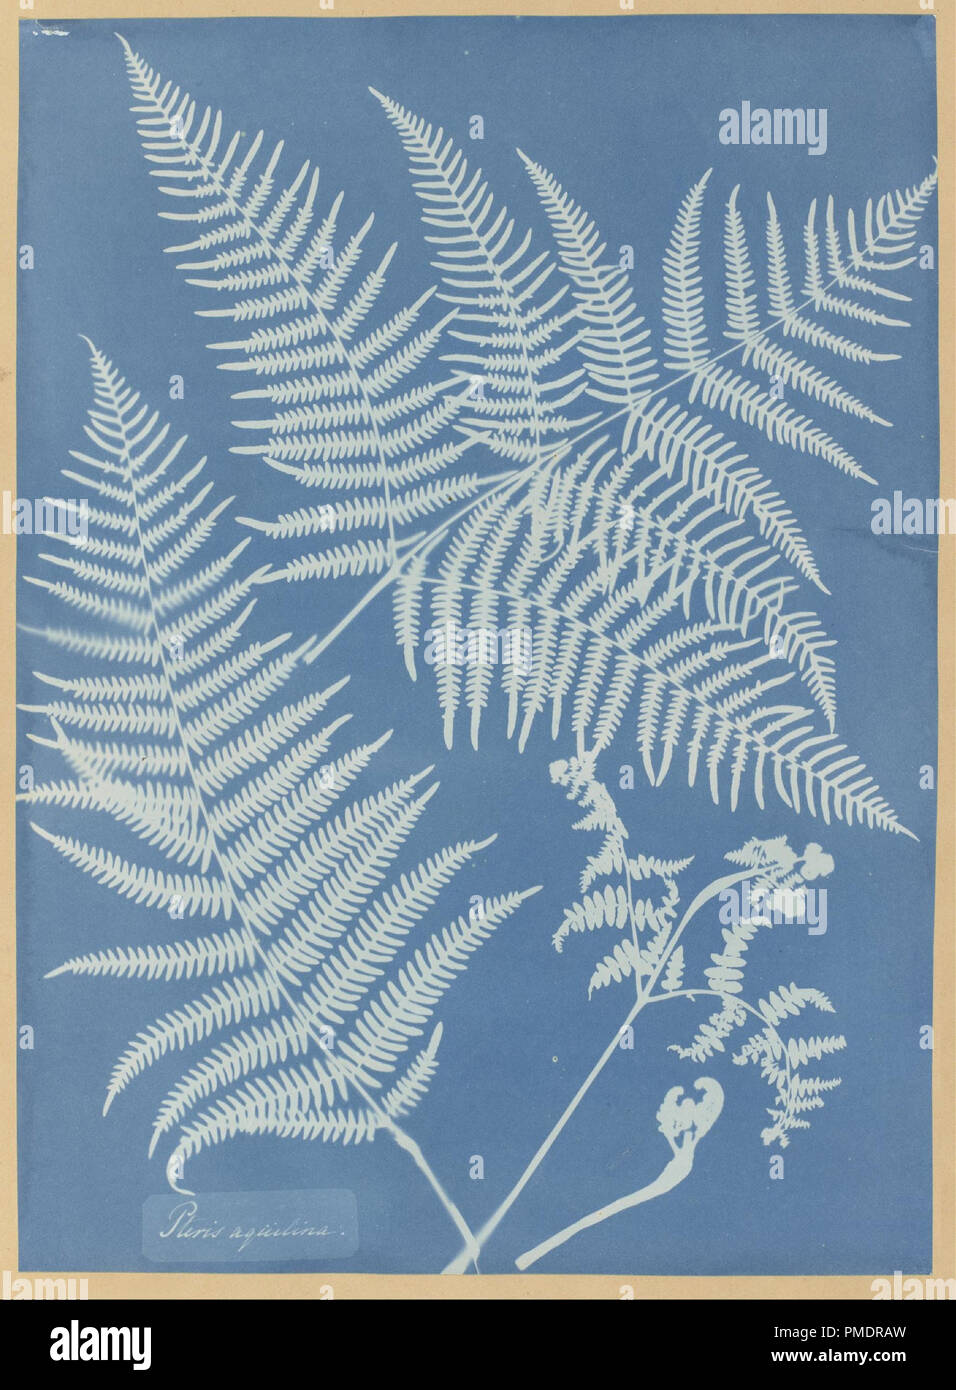 Pteris aquilina. Date/Period: 1851. Cyanotype. Width: 24.4 cm. Height: 33.5 cm (image). Author: Anna Atkins. Stock Photo